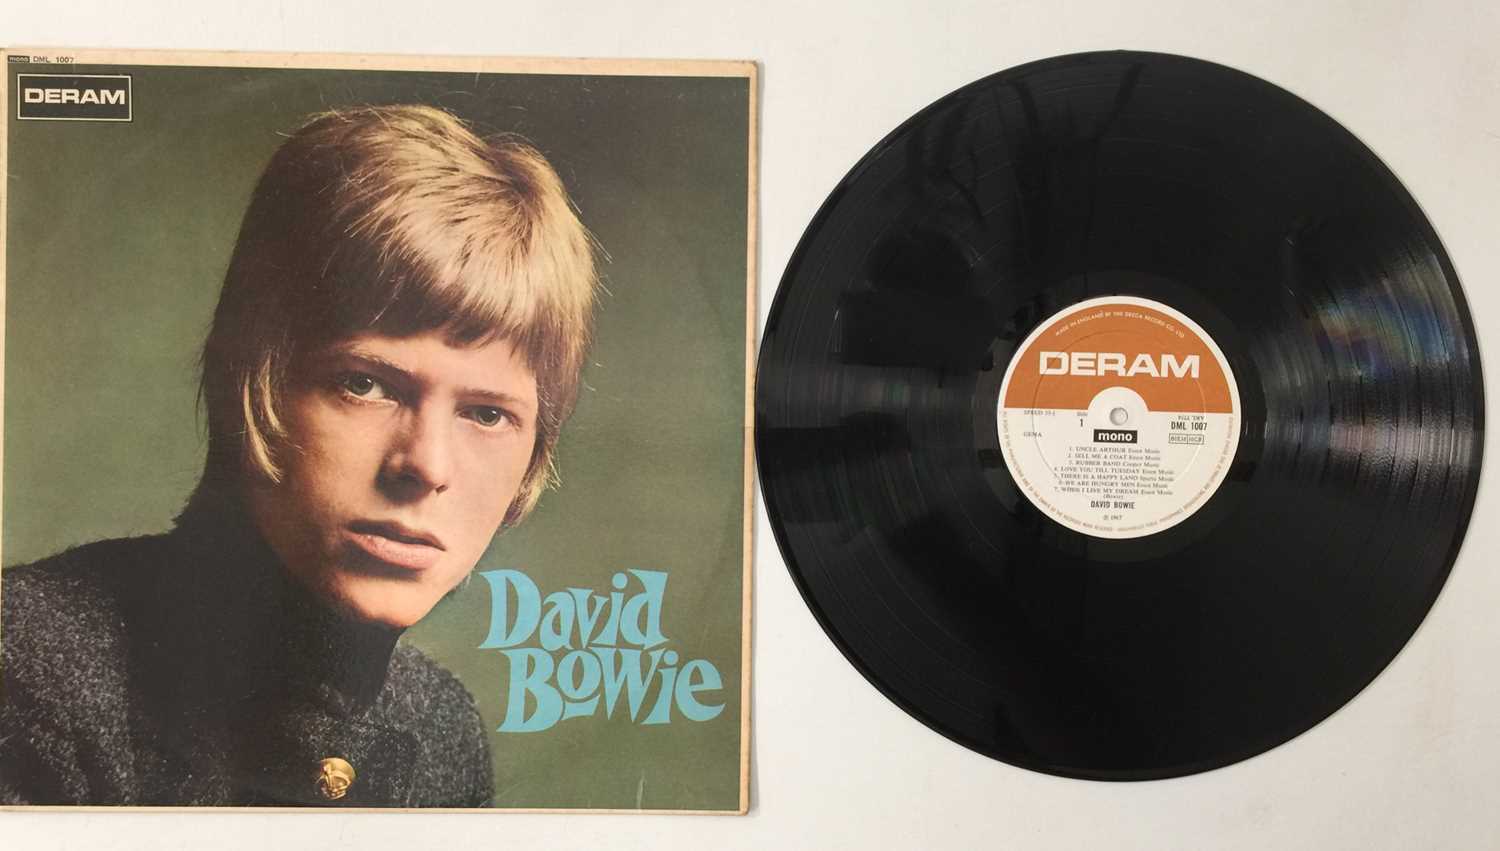 DAVID BOWIE - DAVID BOWIE LP (ORIGINAL UK MONO COPY - DERAM DML 1007)